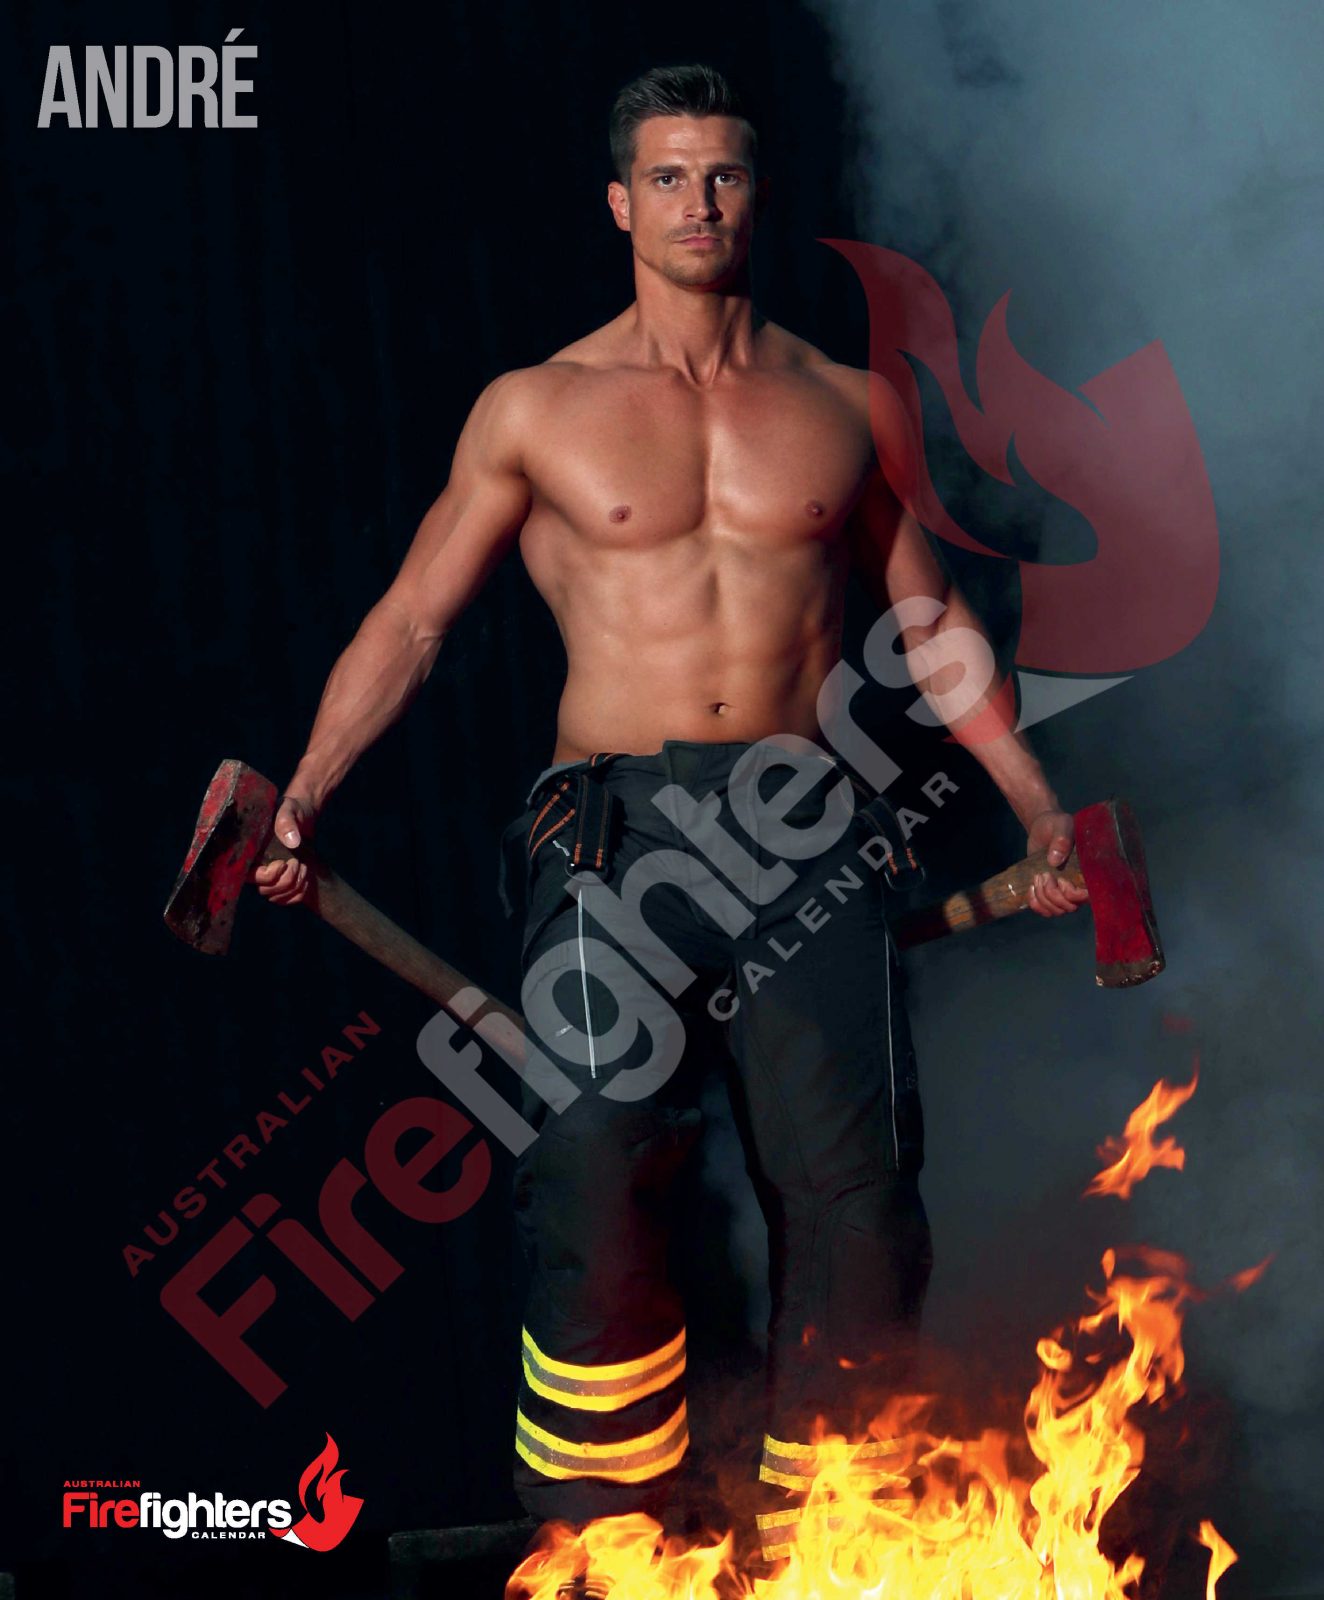 Hot Australian Firefighter Calendar Ally Moselle